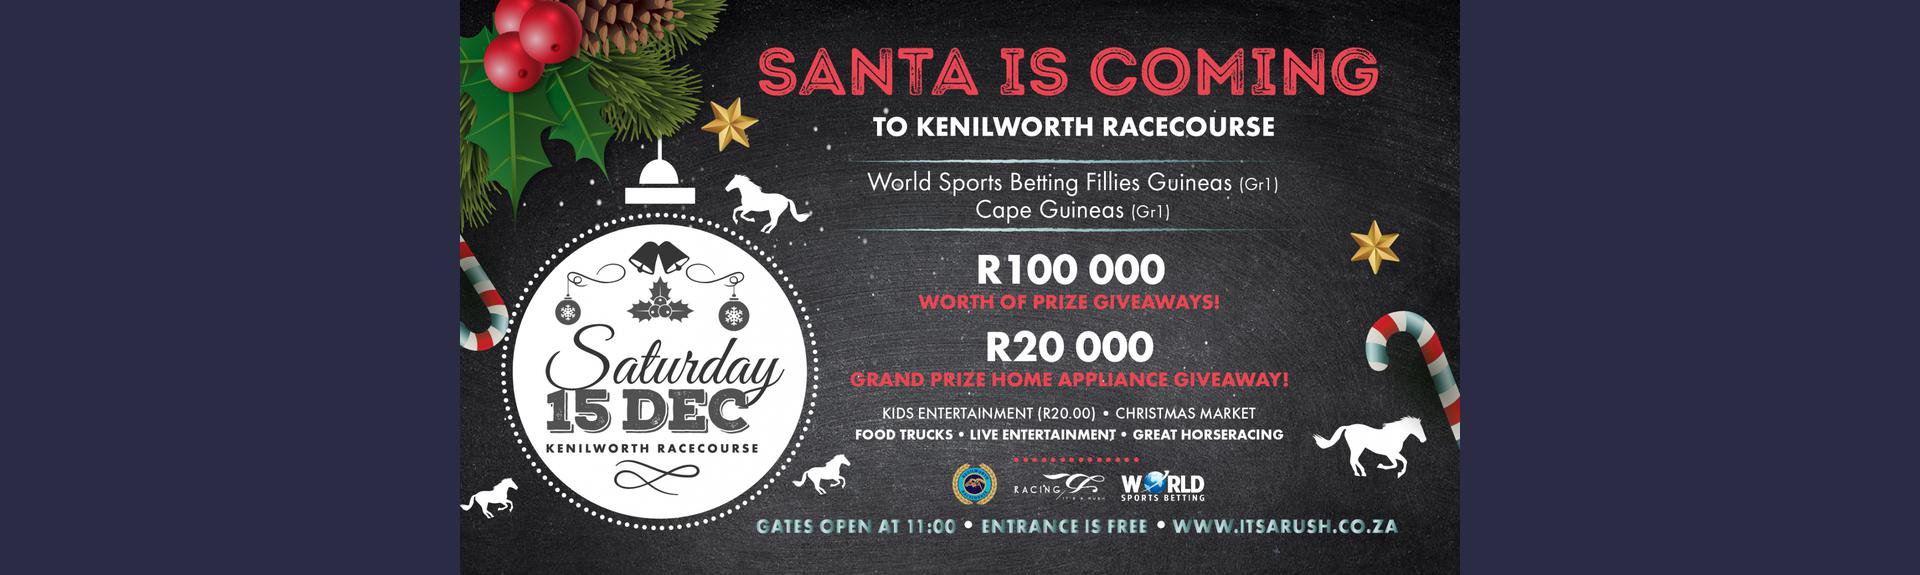 Santa is coming to Kenilworth Racecourse 